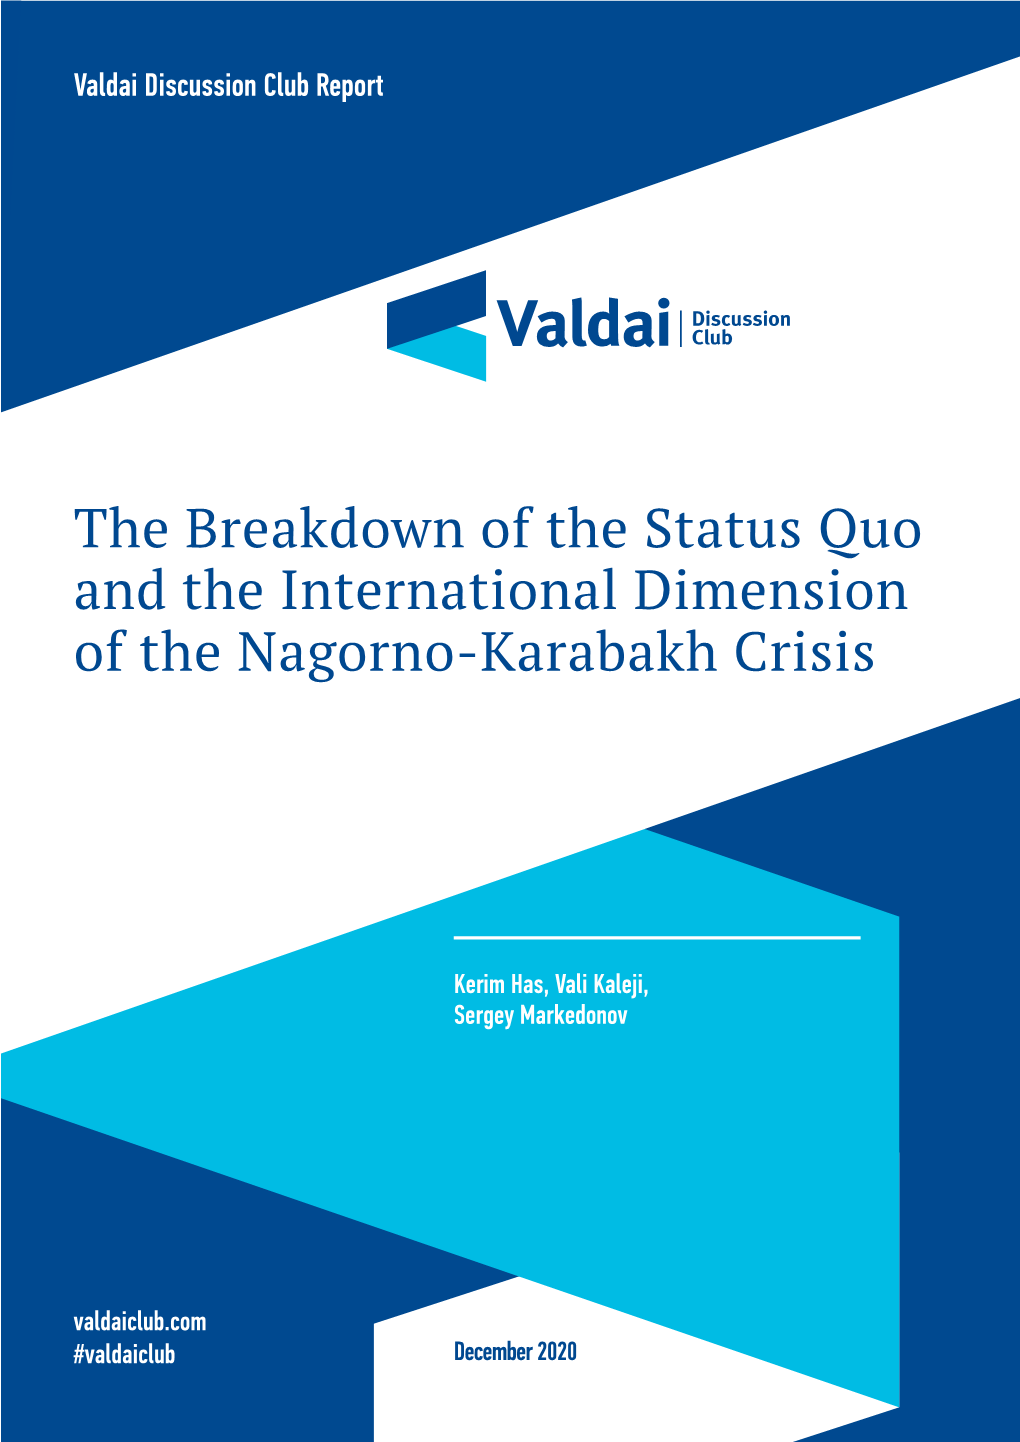 Valdai Club Report the International Dimension of the Nagorno